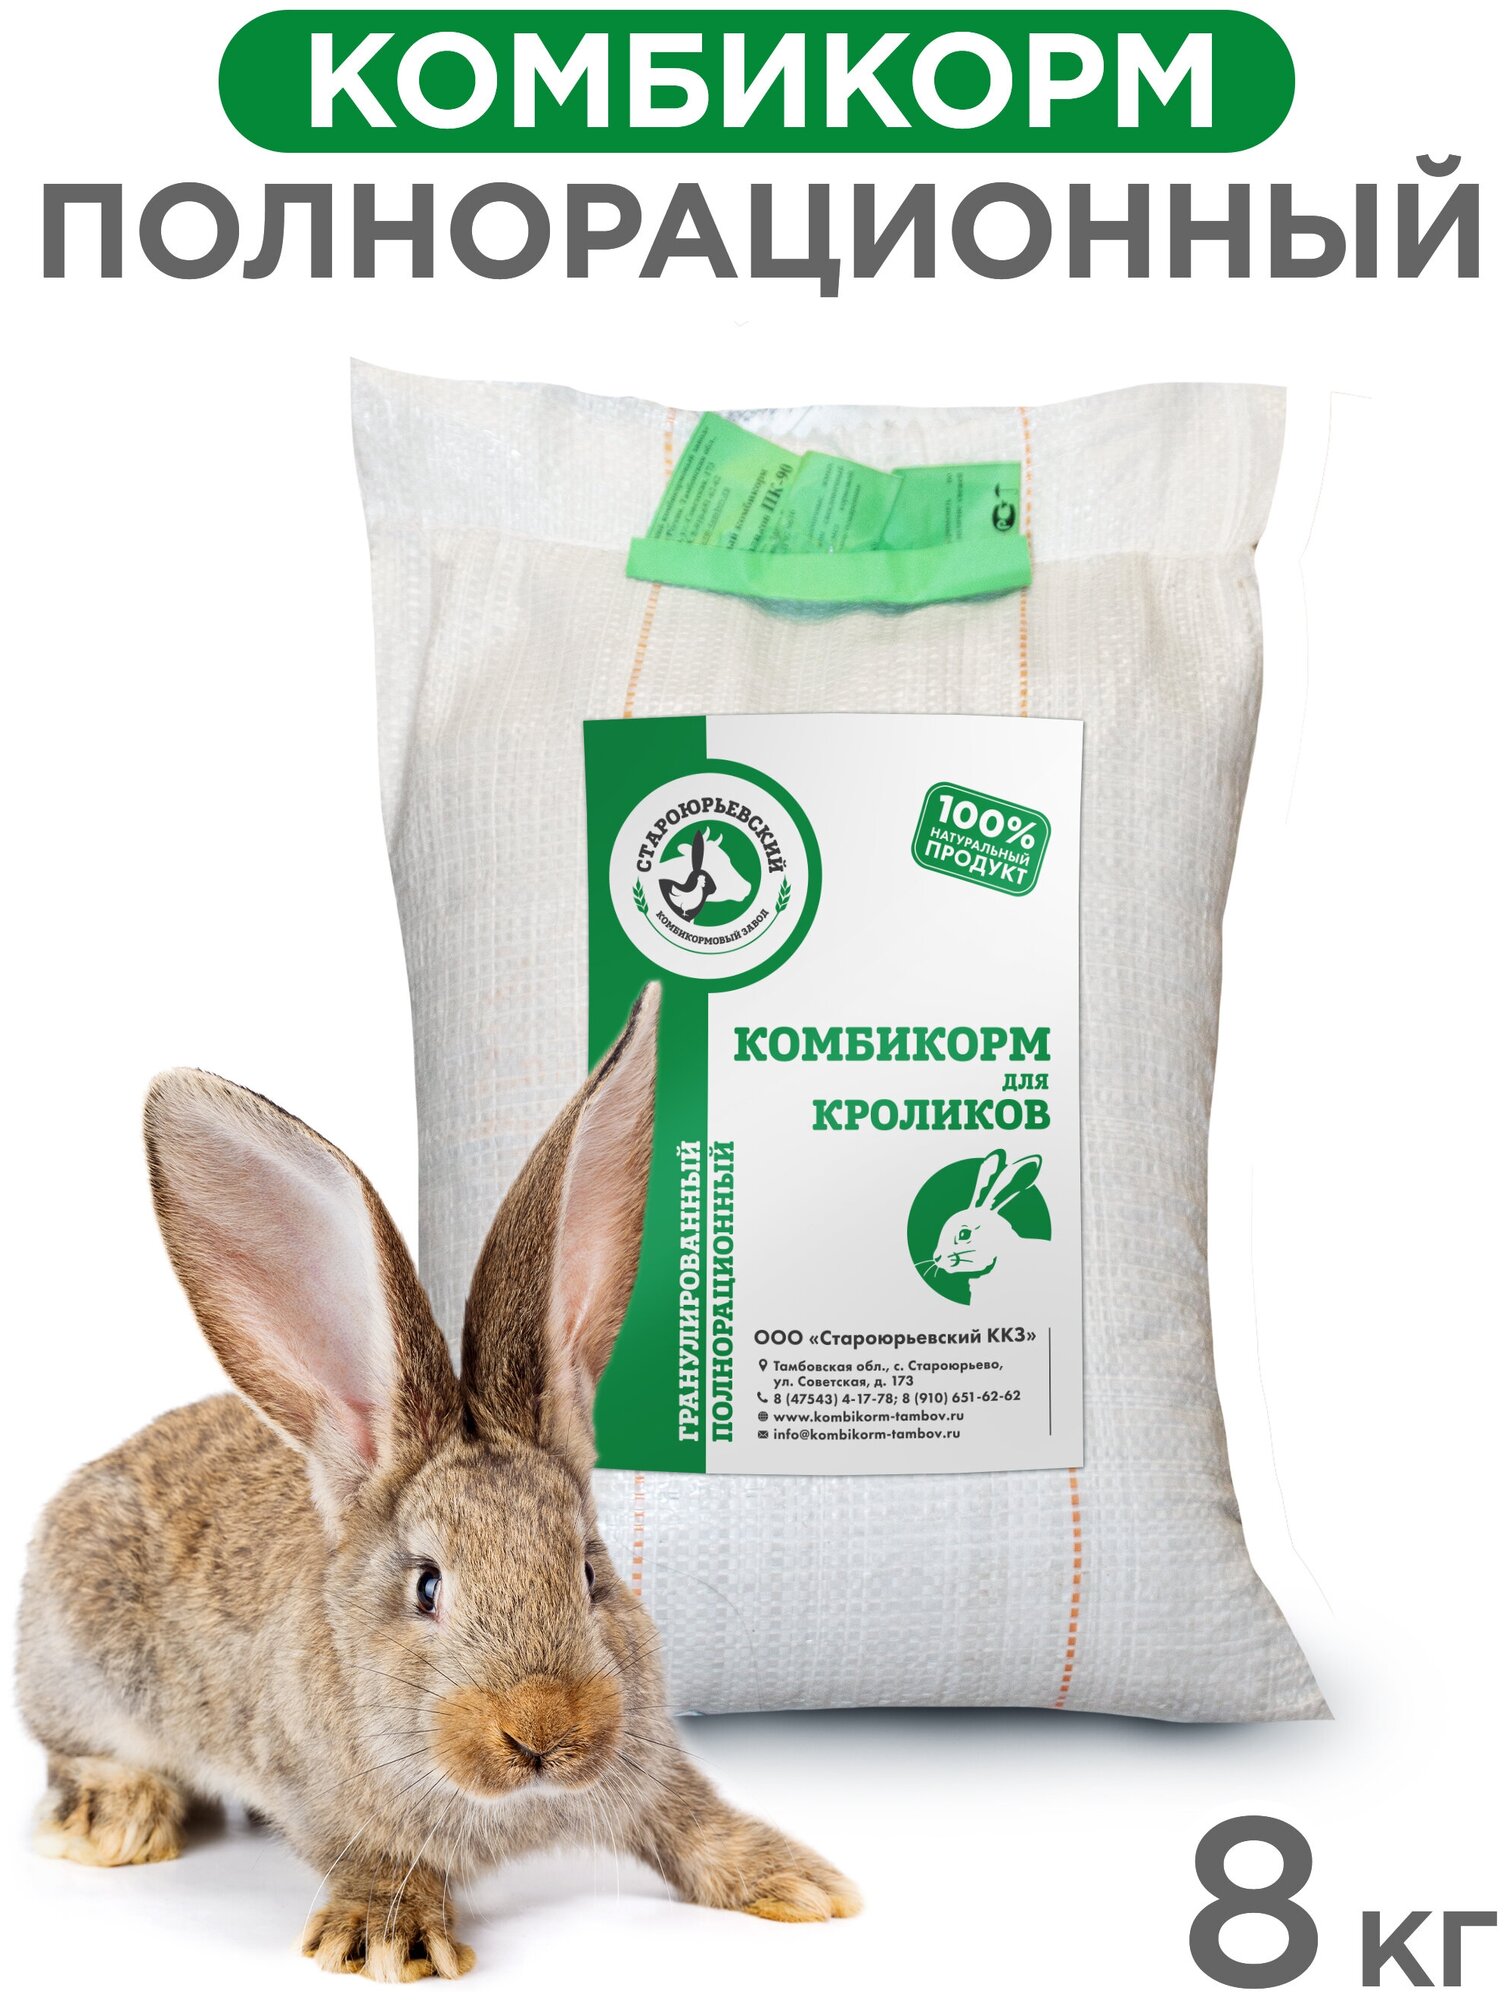 Комбикорм полнорационный ПК-90 для молодняка кроликов, сккз, 8 кг, гранула